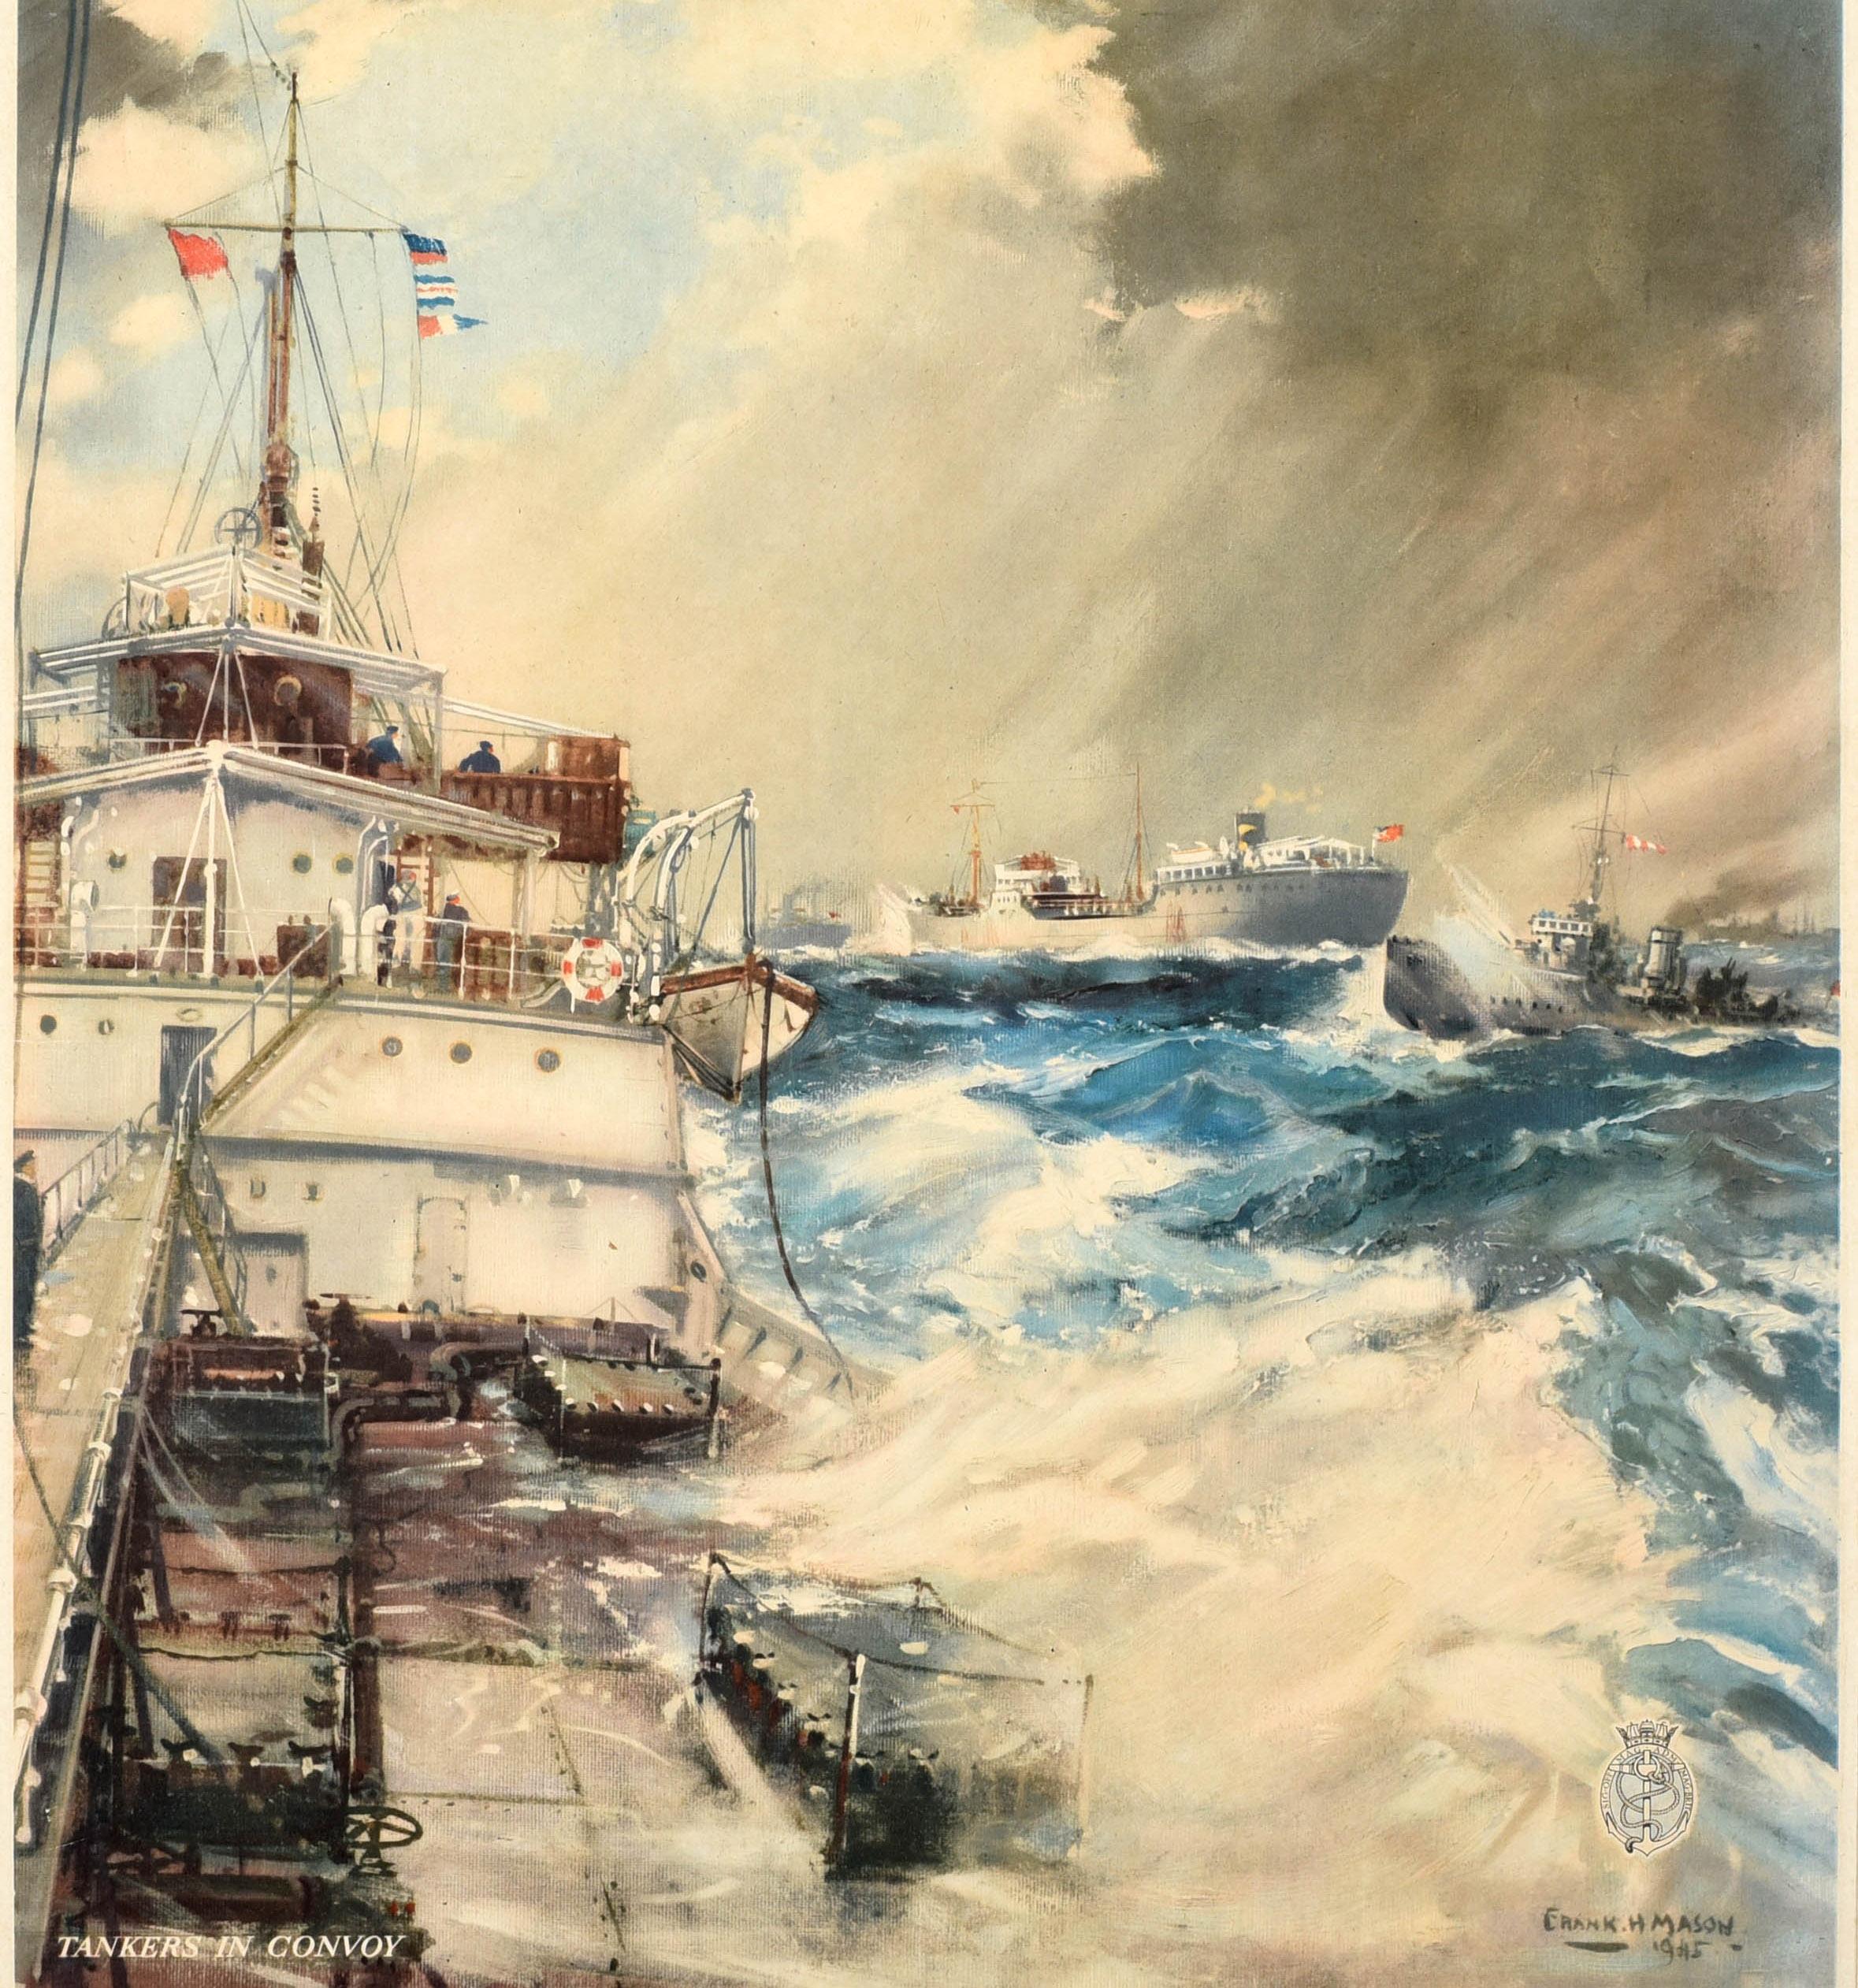 Original Vintage World War Two Poster Britain's Sea Power Maintain Savings WWII - Print by Frank Mason